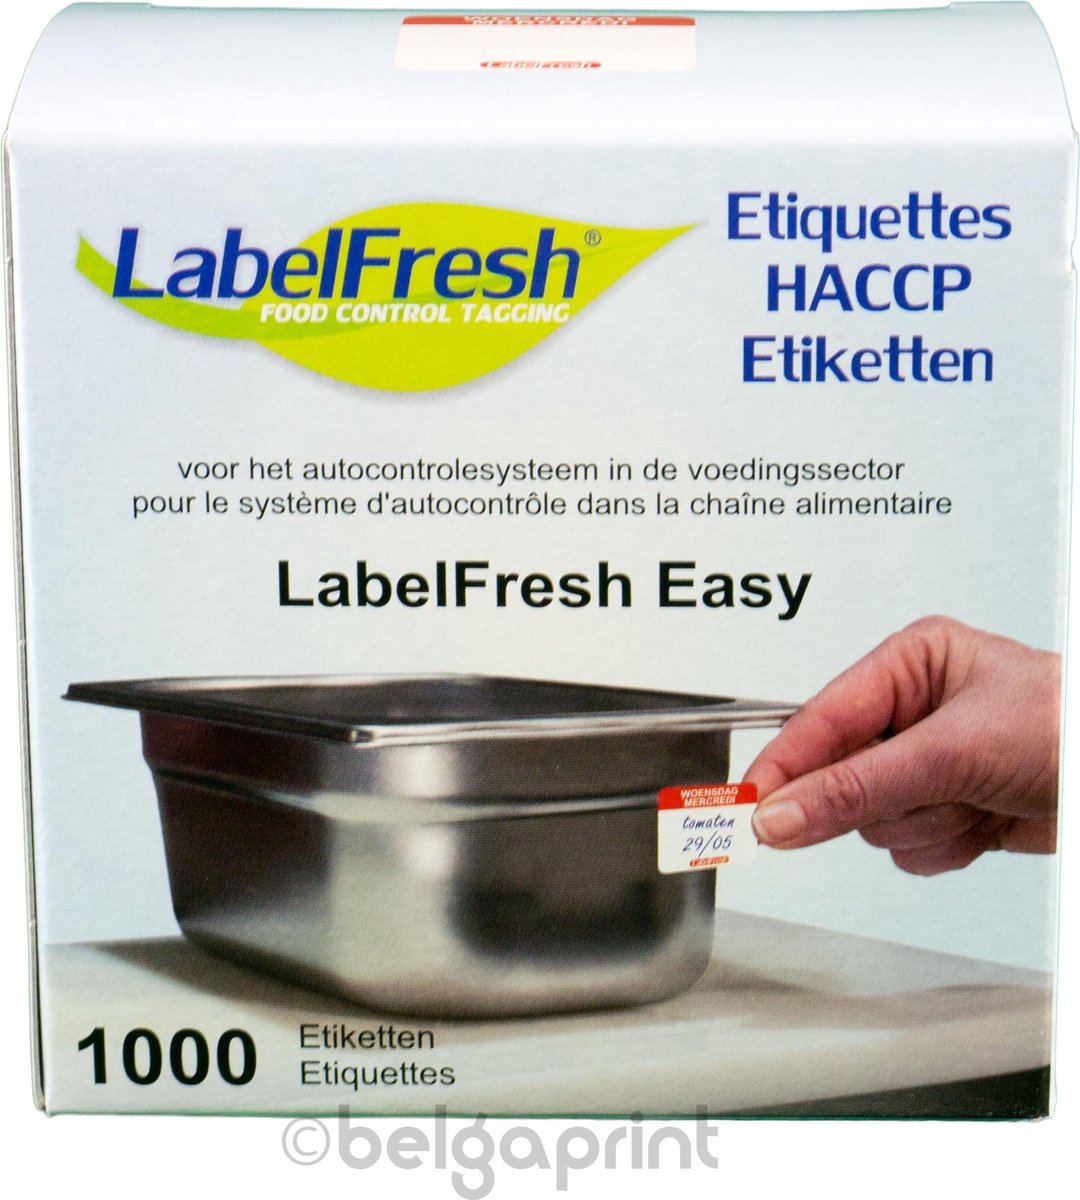 1000 LabelFresh Easy - 30x25 mm - woensdag-mercredi - HACCP etiketten / stickers